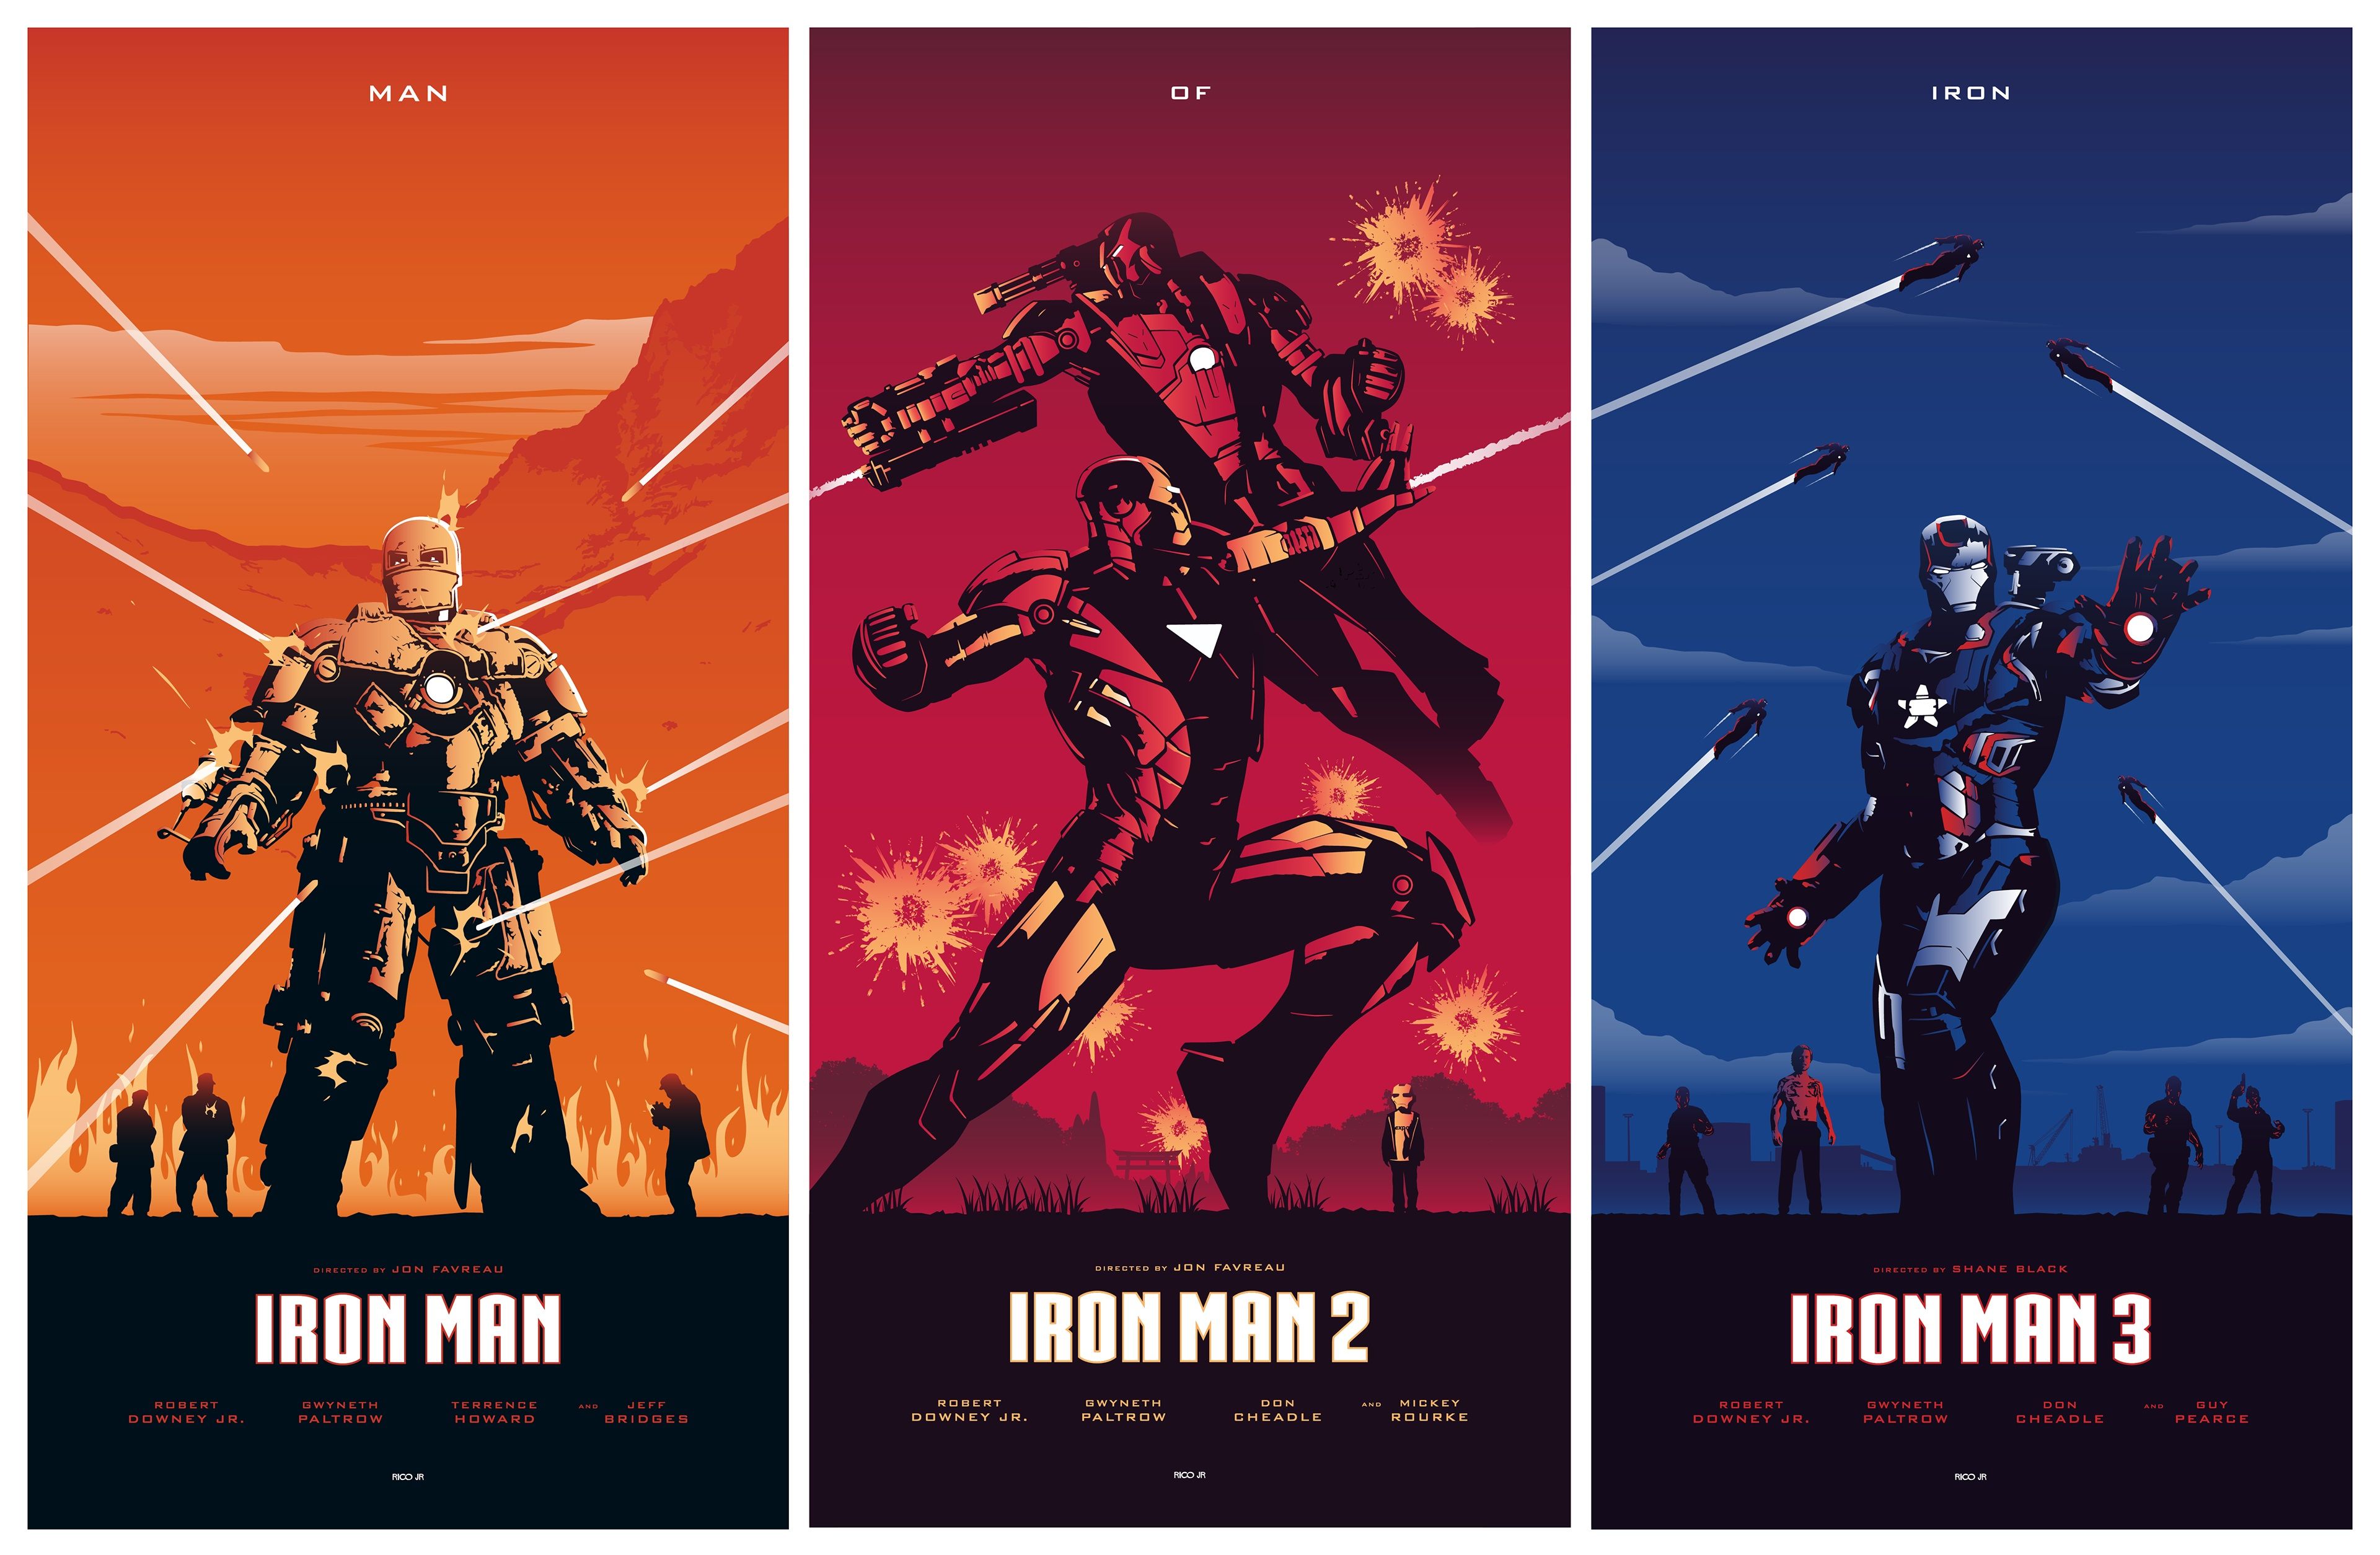 #collage, #Iron Man, #Marvel Cinematic Universe, #poster, #movie poster, #movies, #superhero, #Marvel Comics, wallpaper. Mocah.org HD Wallpaper